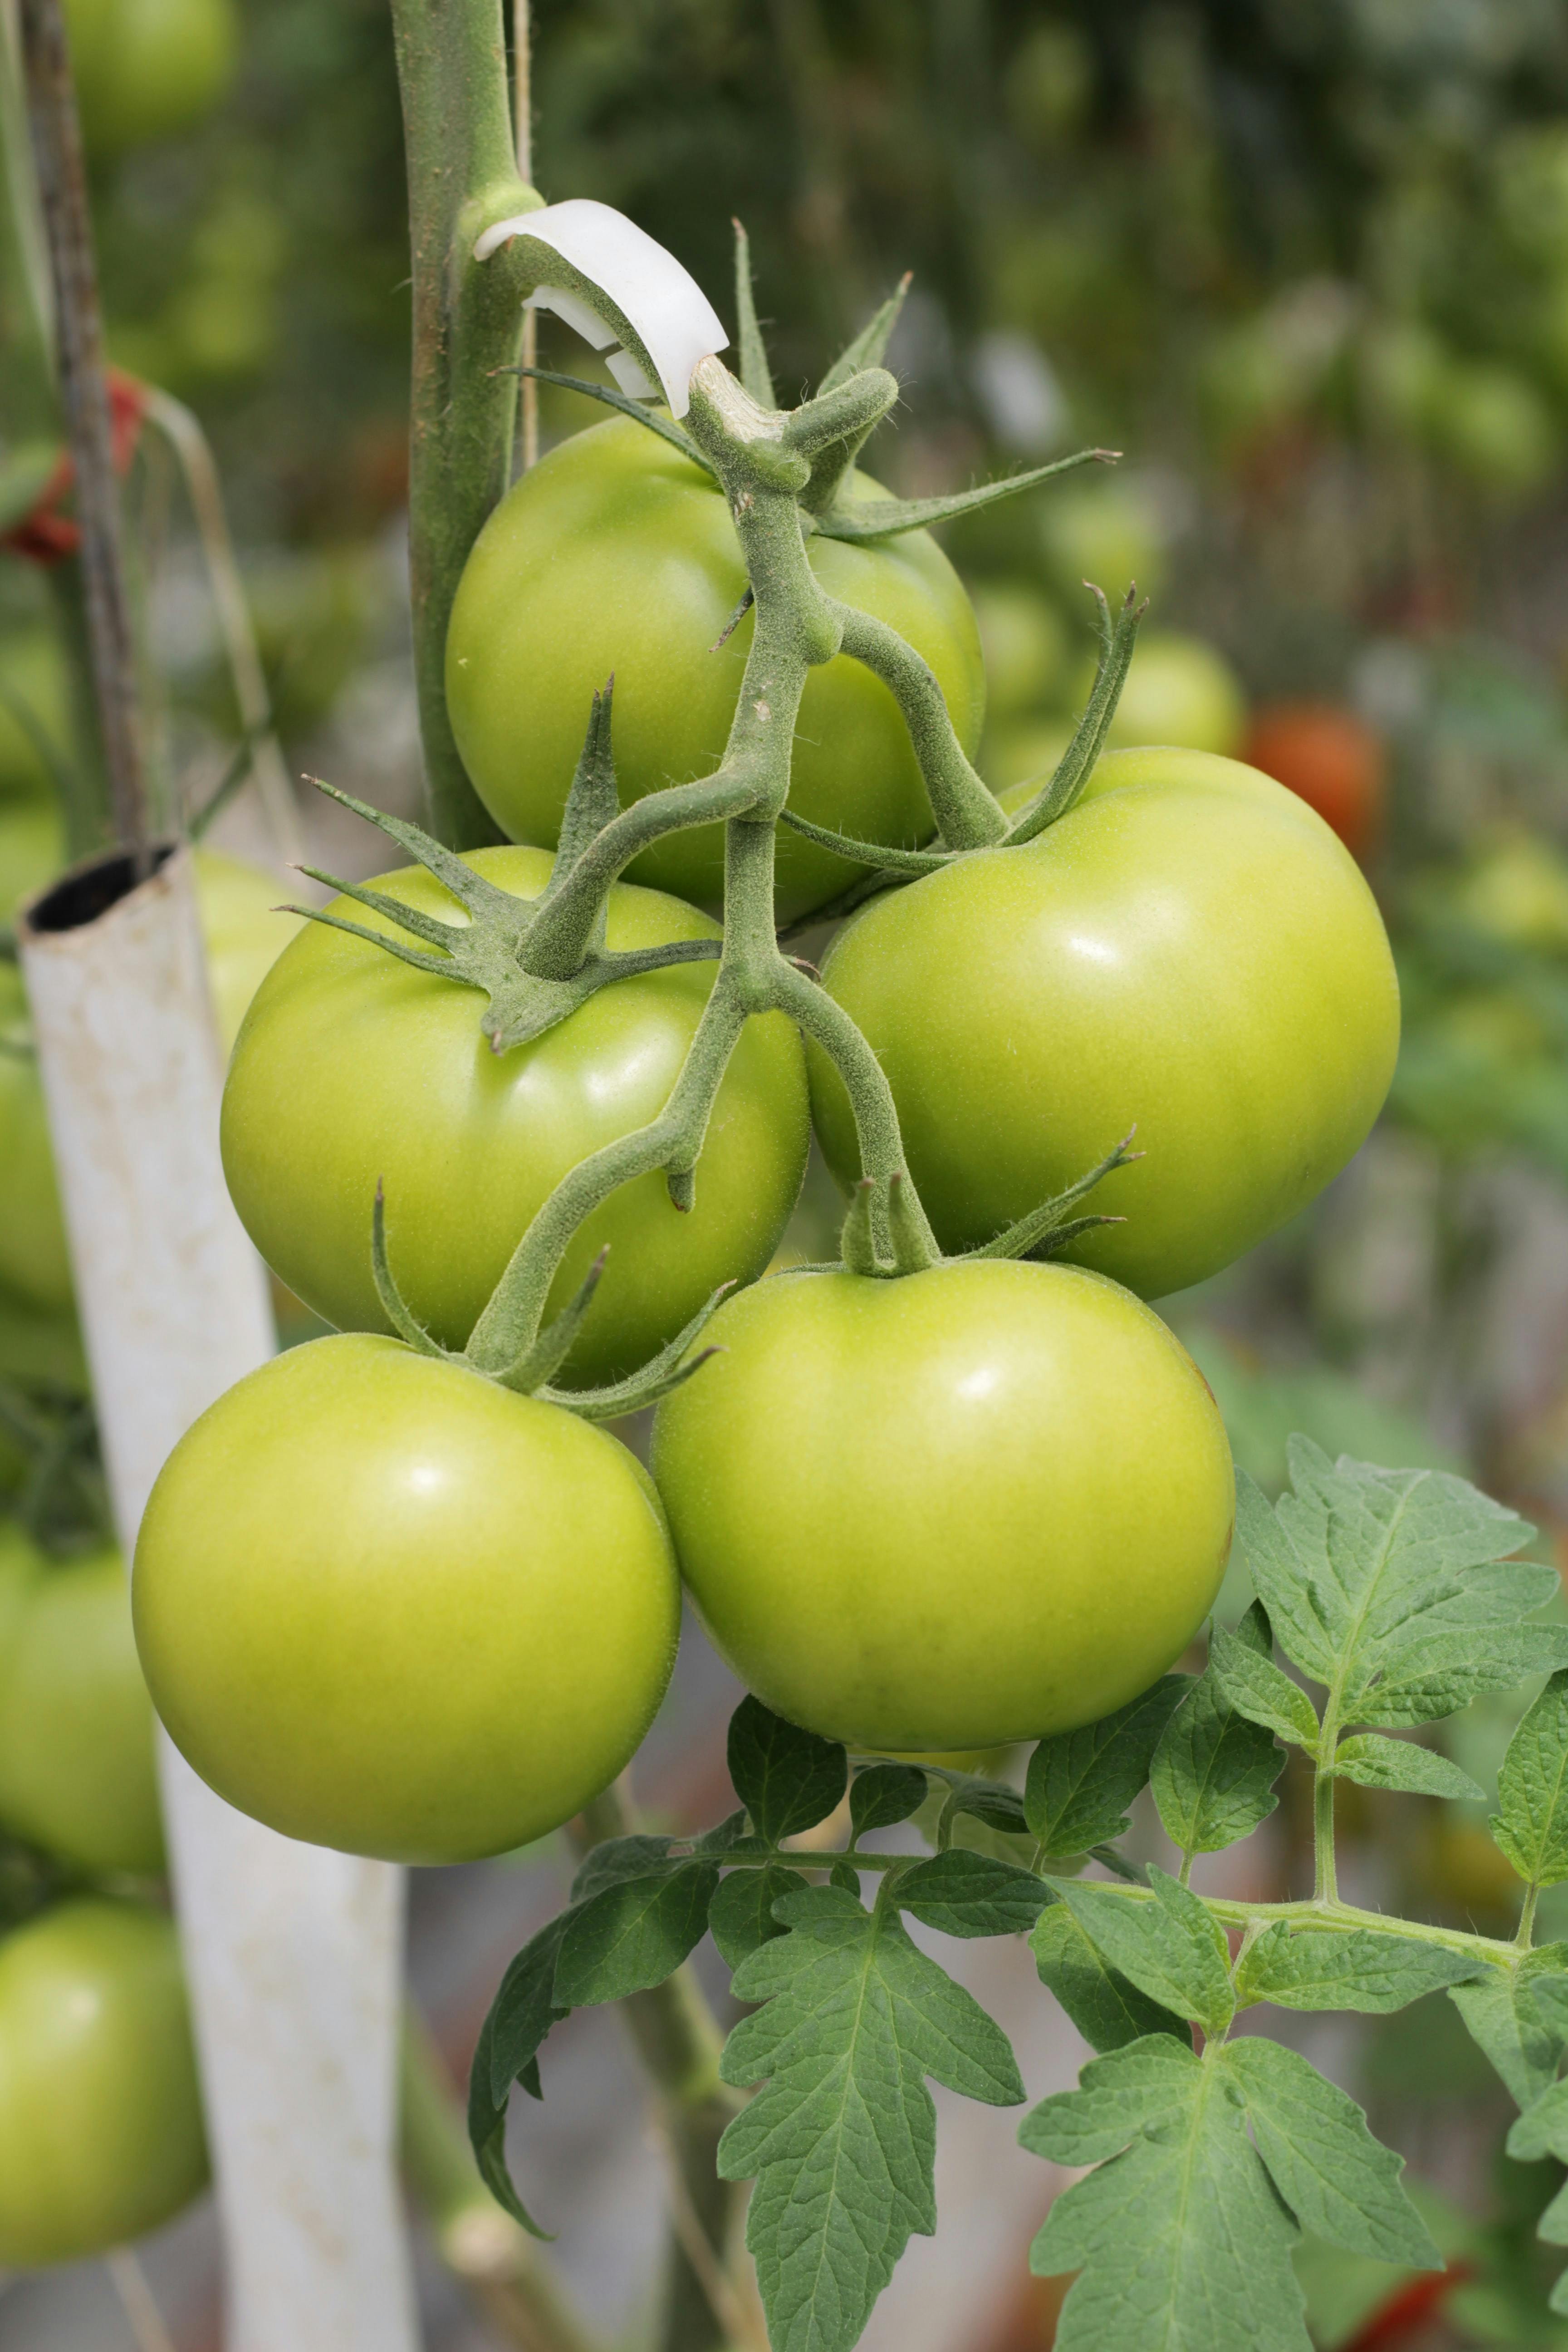 10 ways you can use green tomatoes | Oddbox